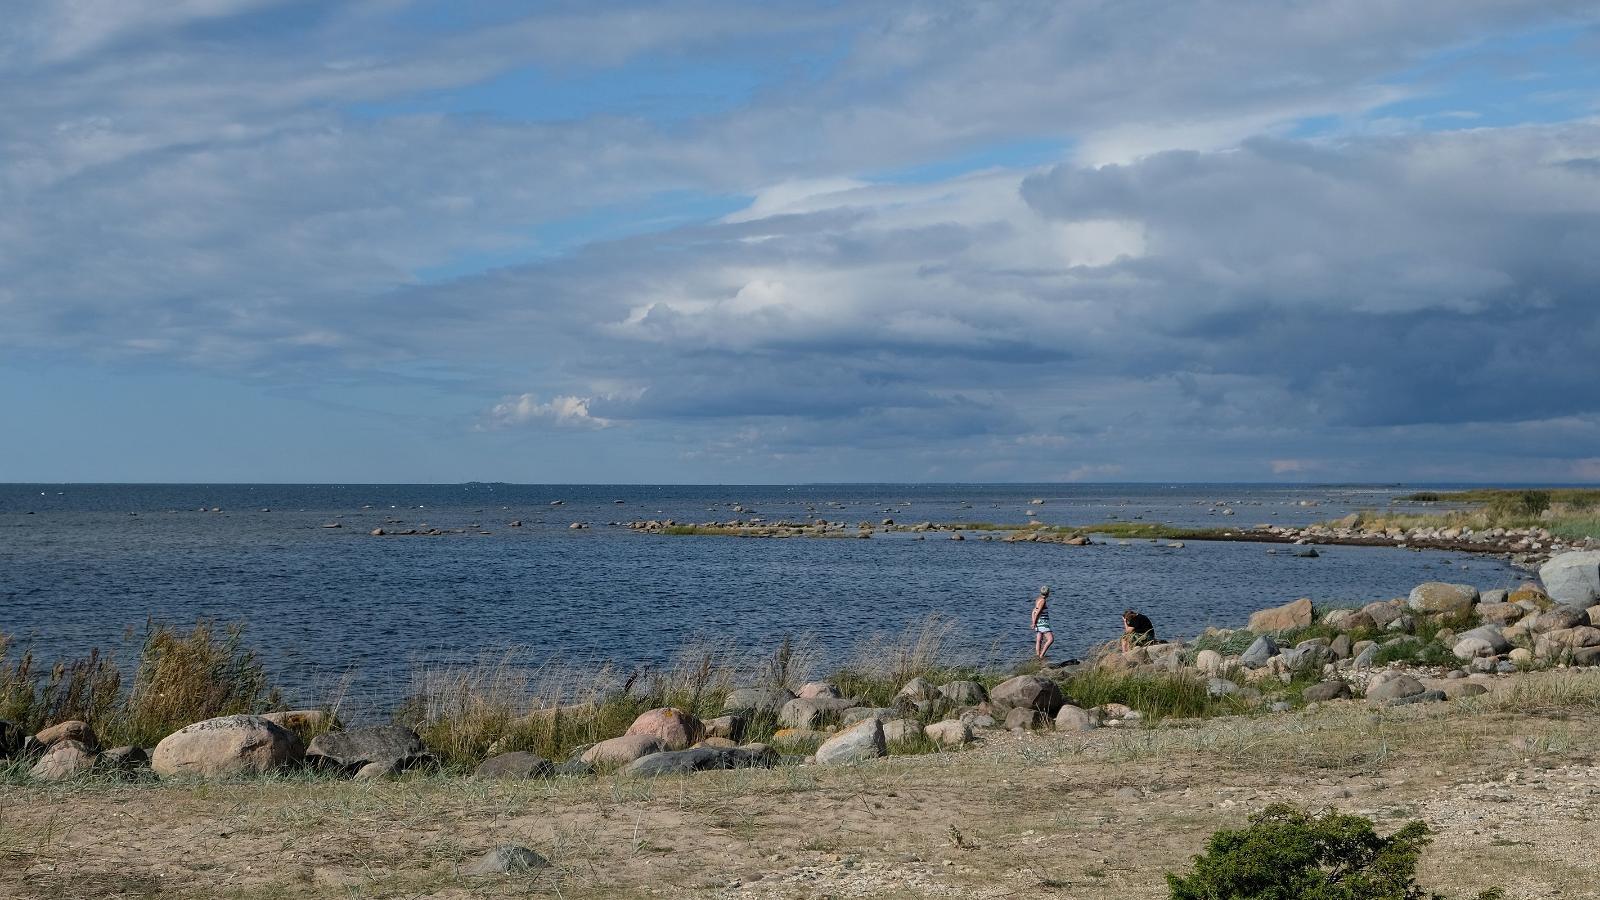 Suarõ Ninä – a former landing place